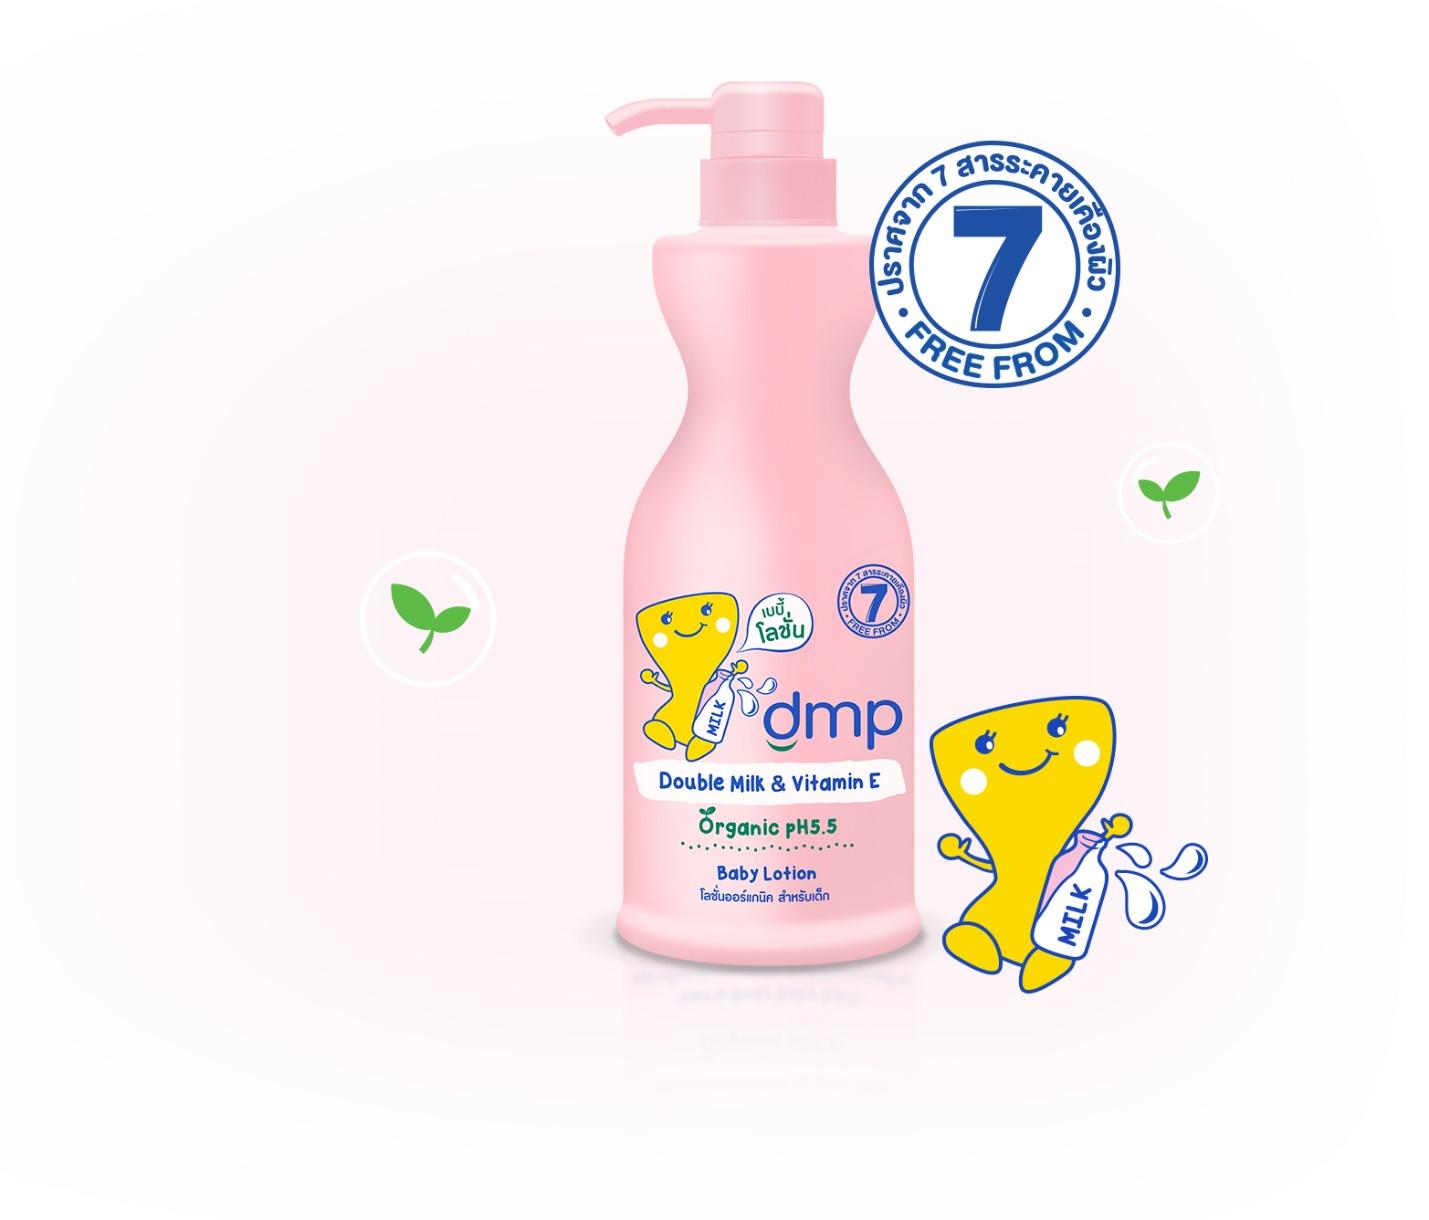 5. DMP Double Milk & Vitamin E Organic pH 5.5 Baby Lotion 